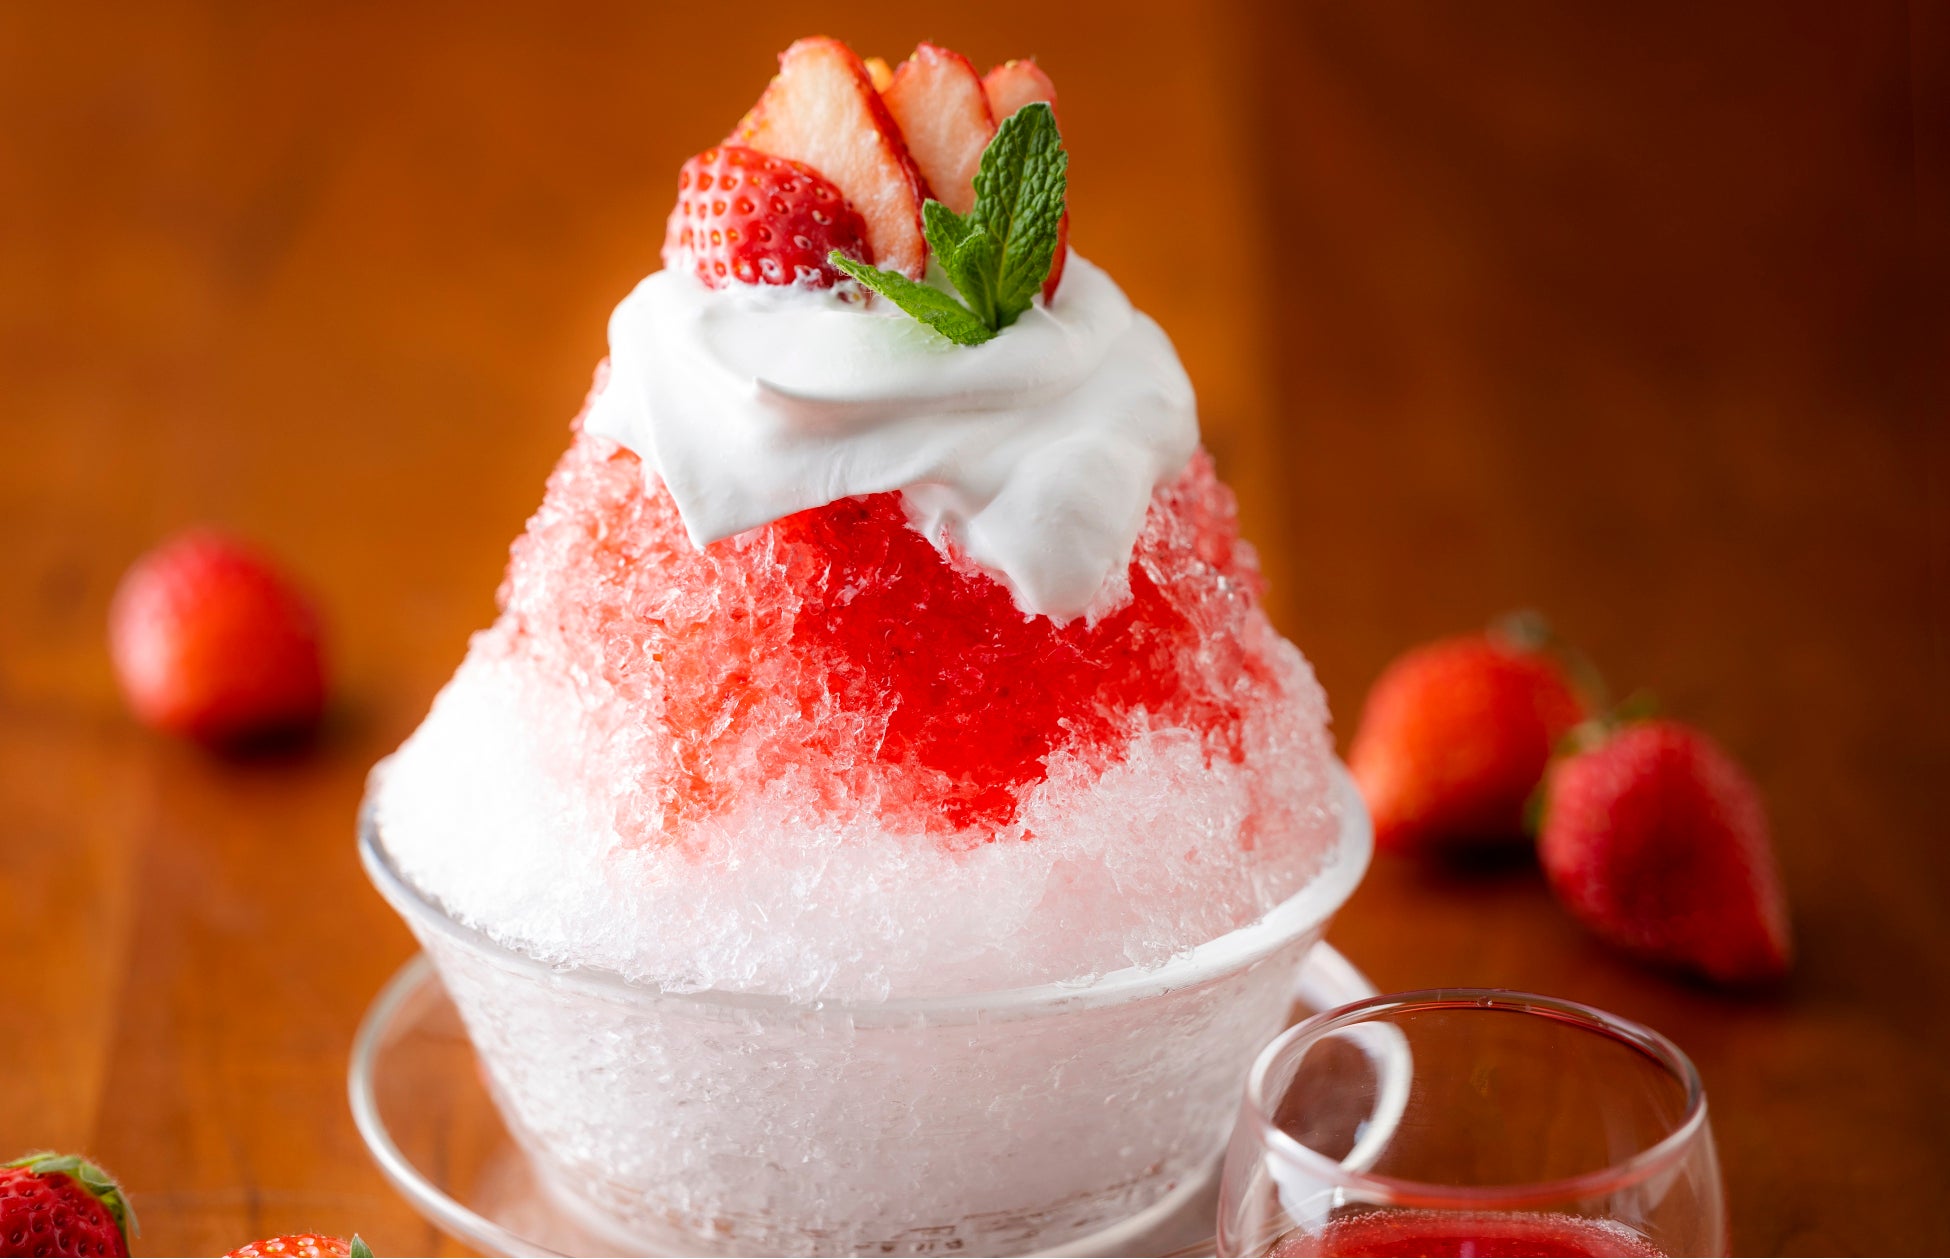 「Strawberry & Yogurt」イメージ